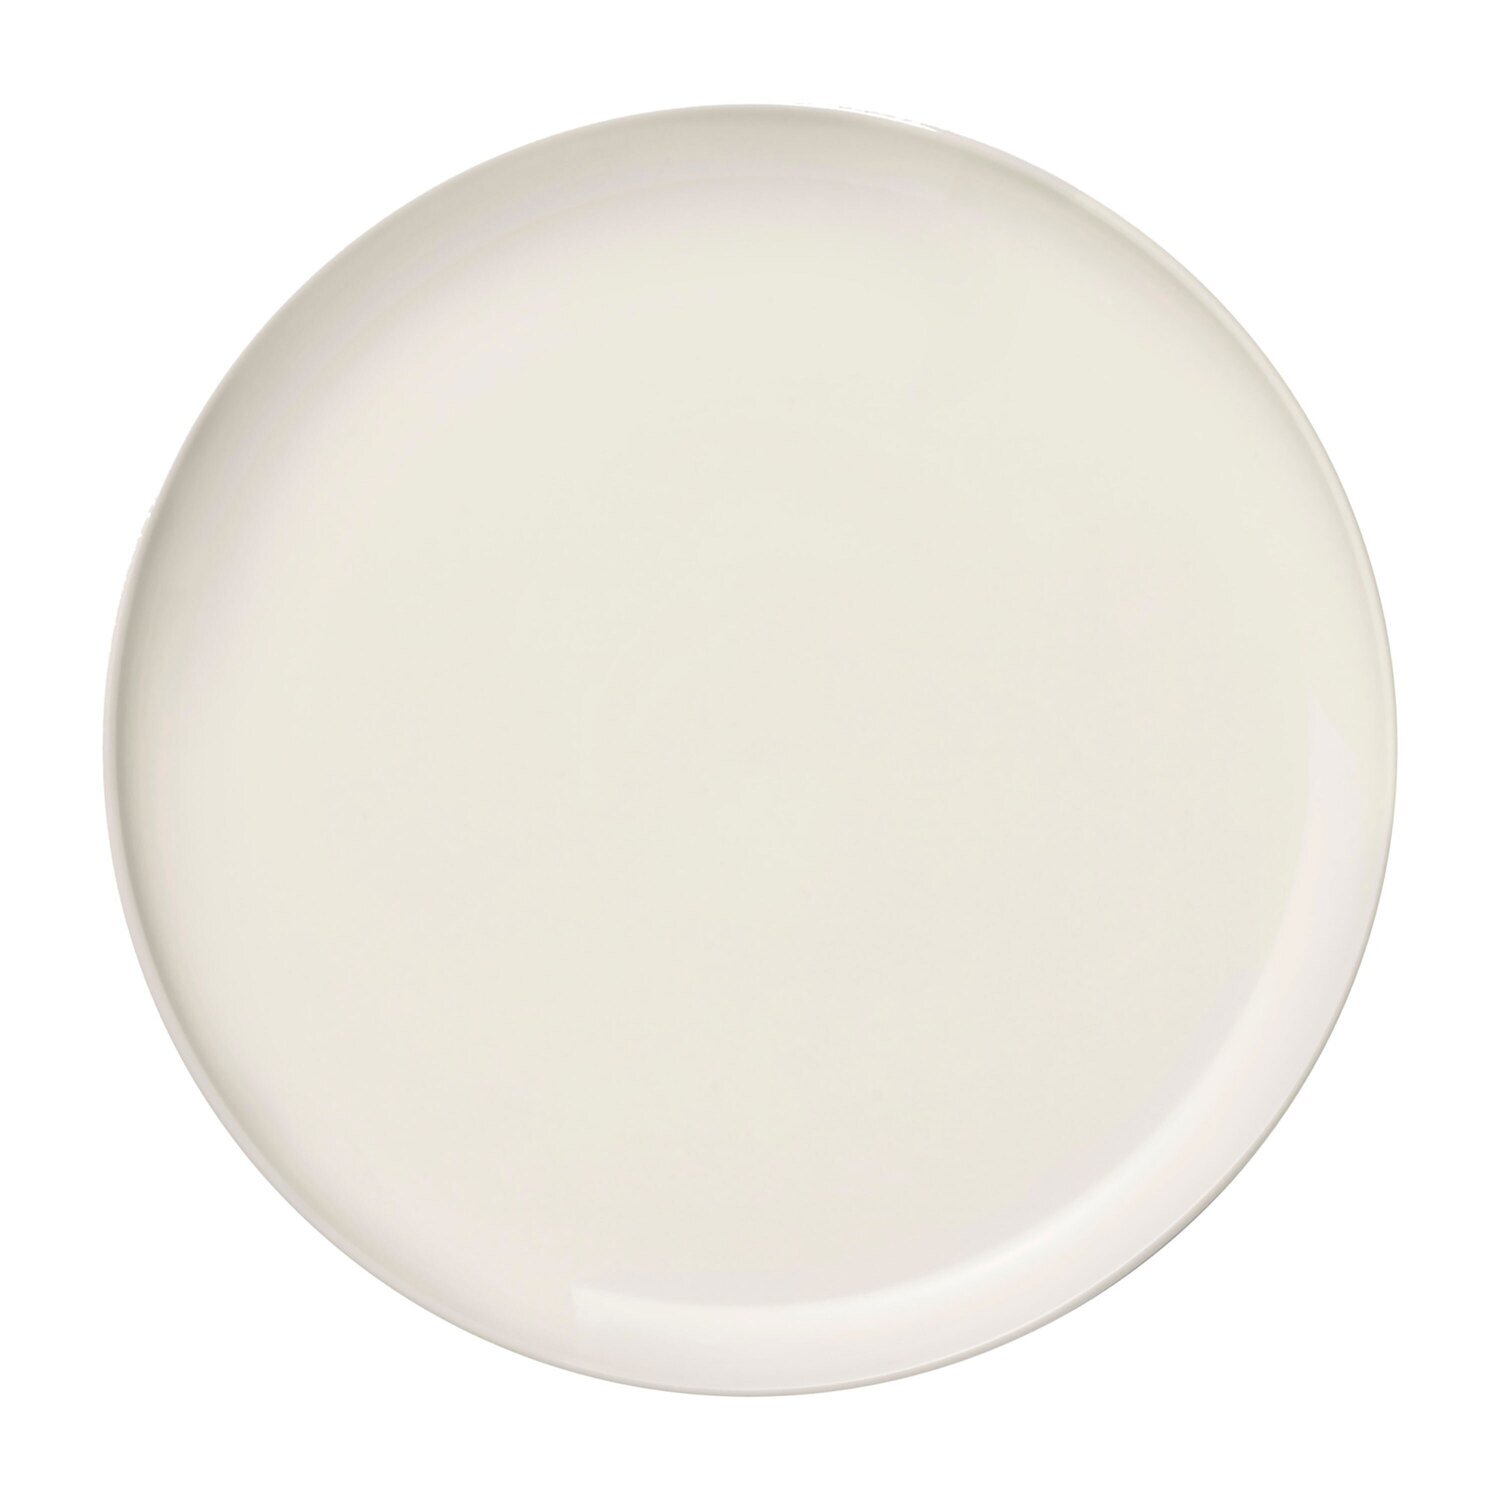 iittala Essence Plate 10.5 Inch White